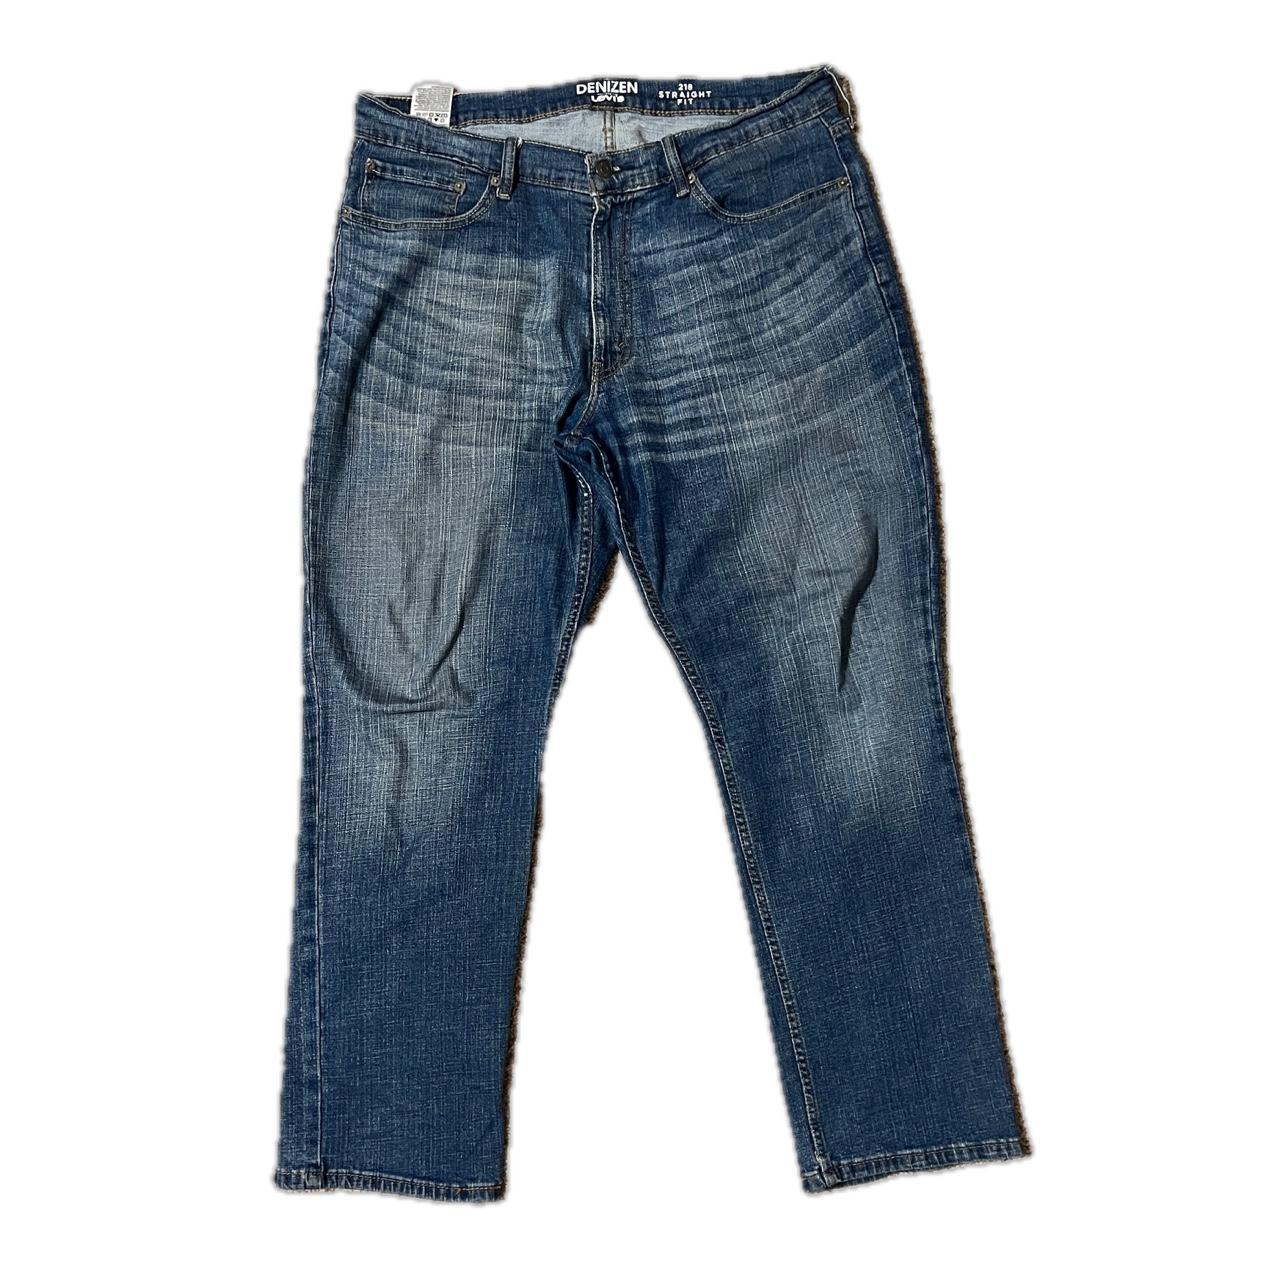 Denizen From Levi's Jeans Mens 36X30 Blue Denim Mid... - Depop